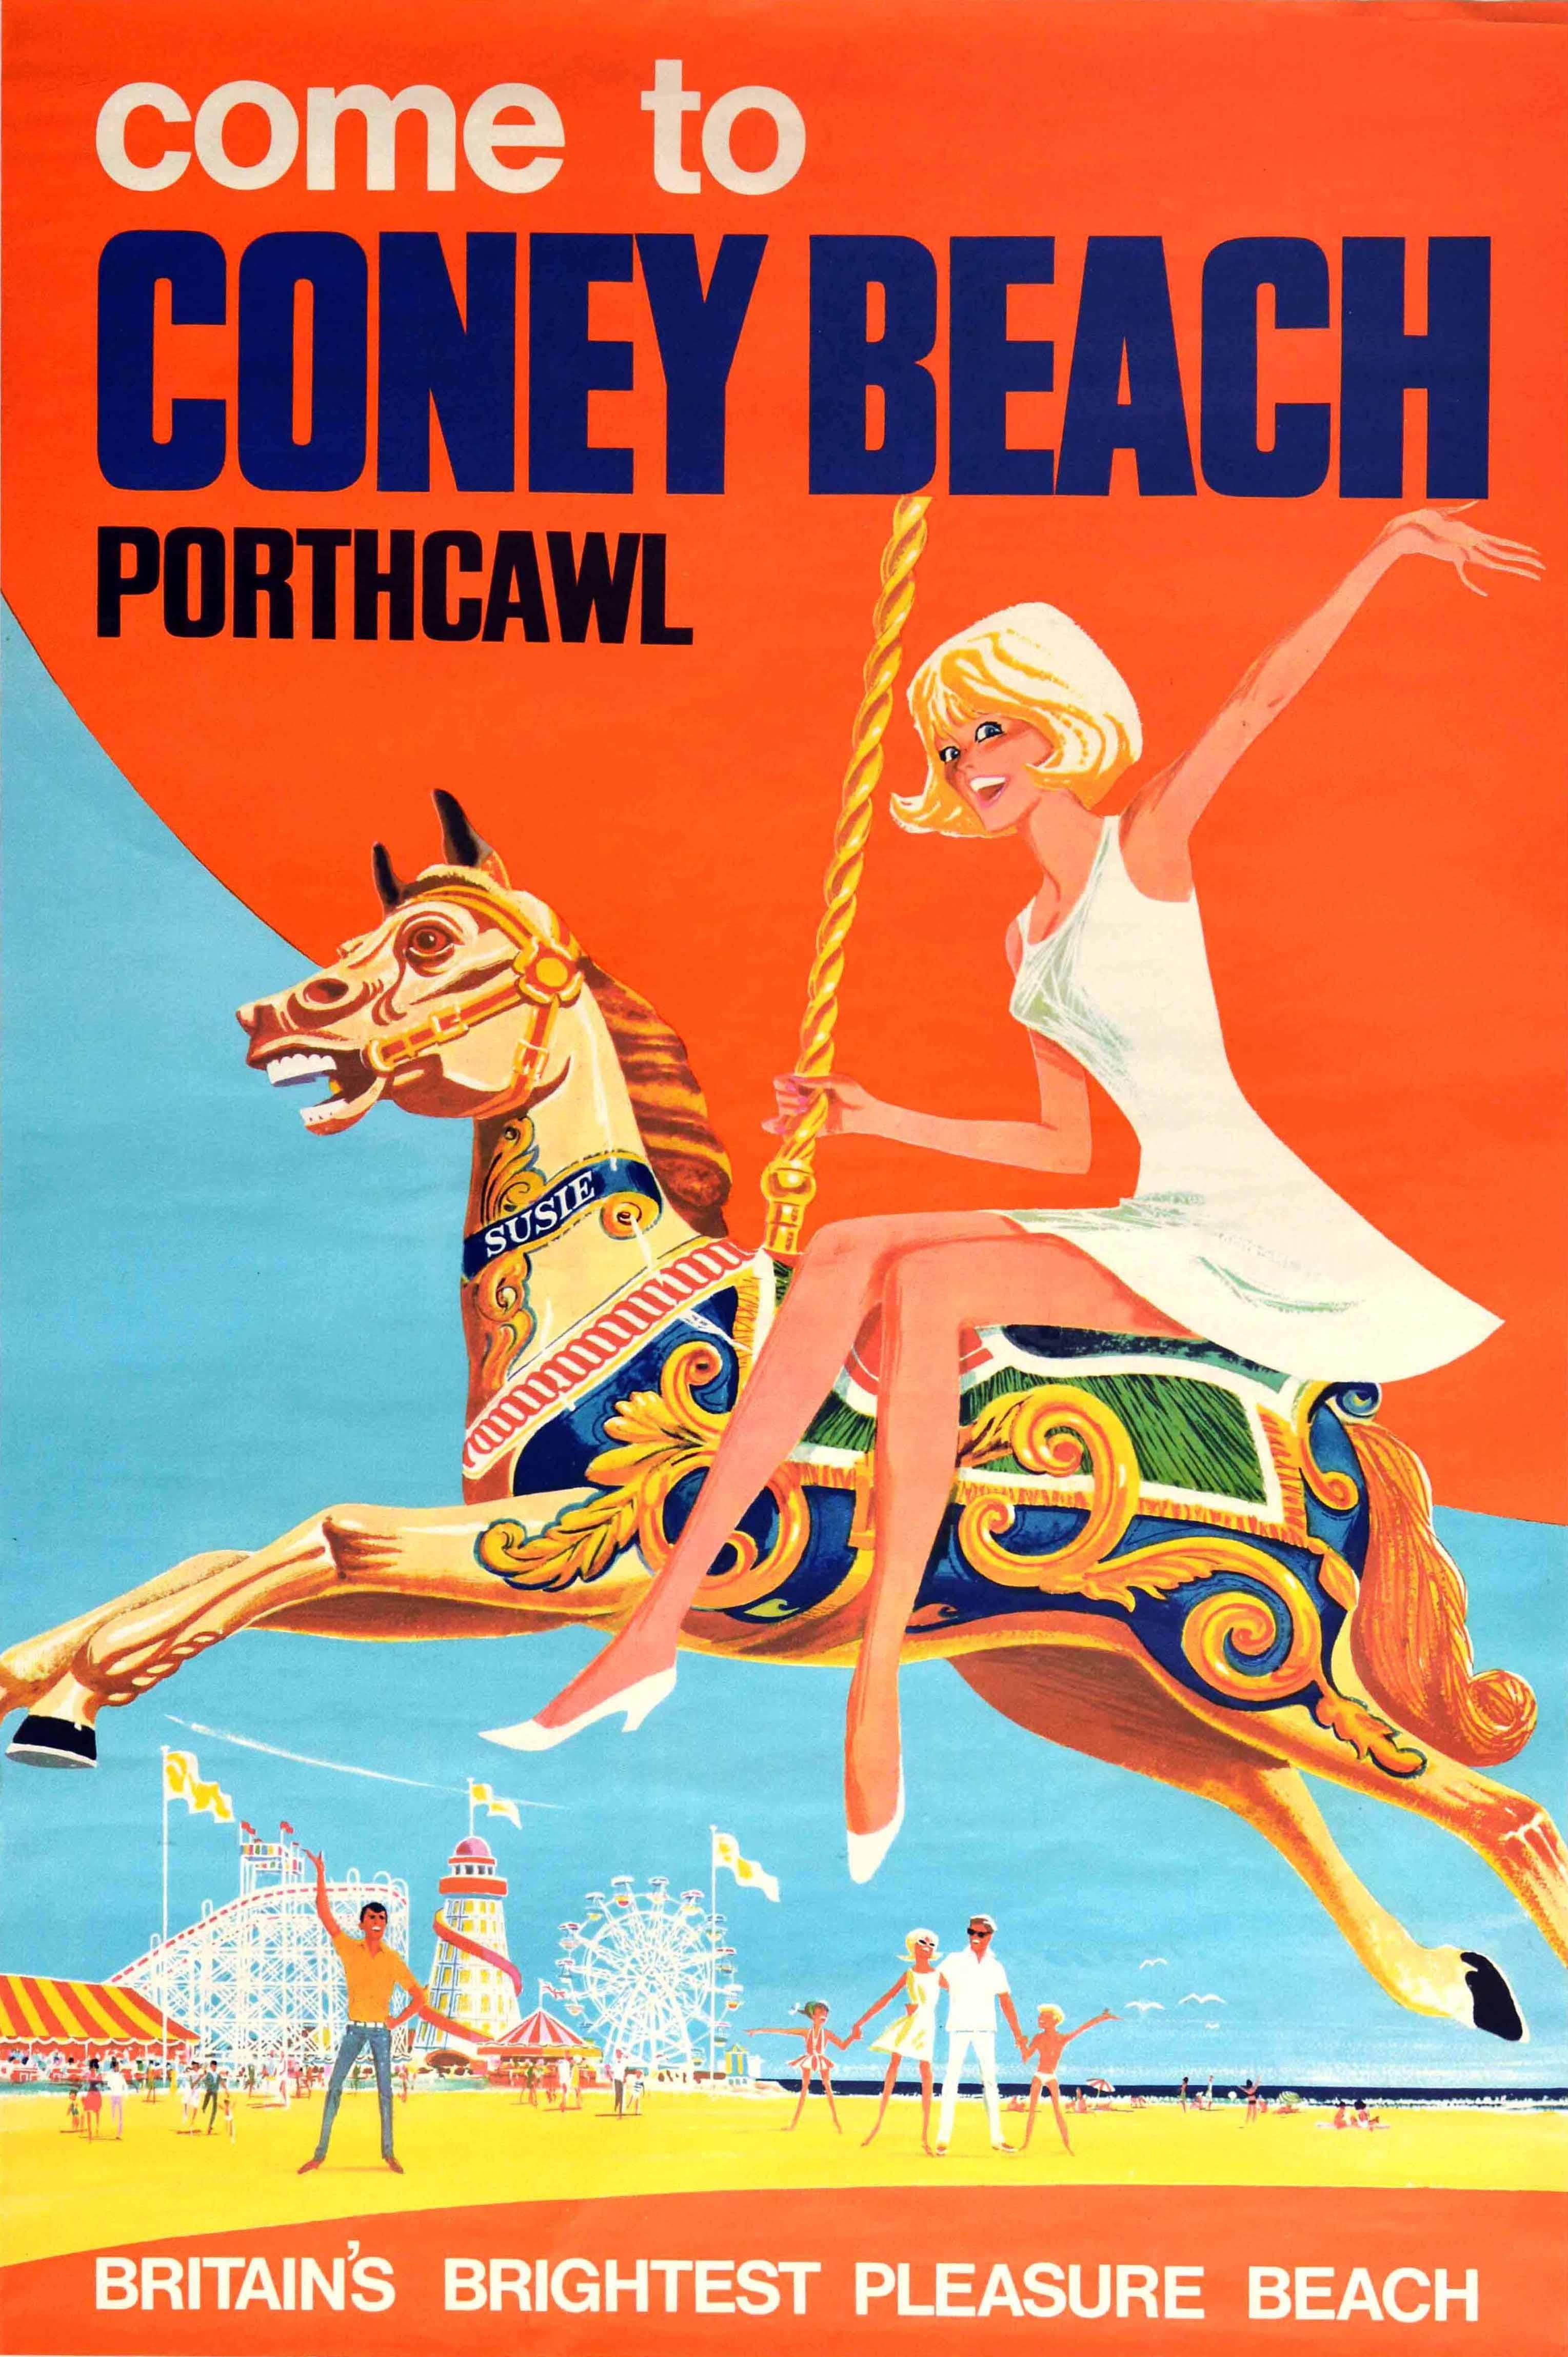 H. Riley Print - Original Vintage Poster For Coney Beach Porthcawl Wales Fairground Pleasure Park